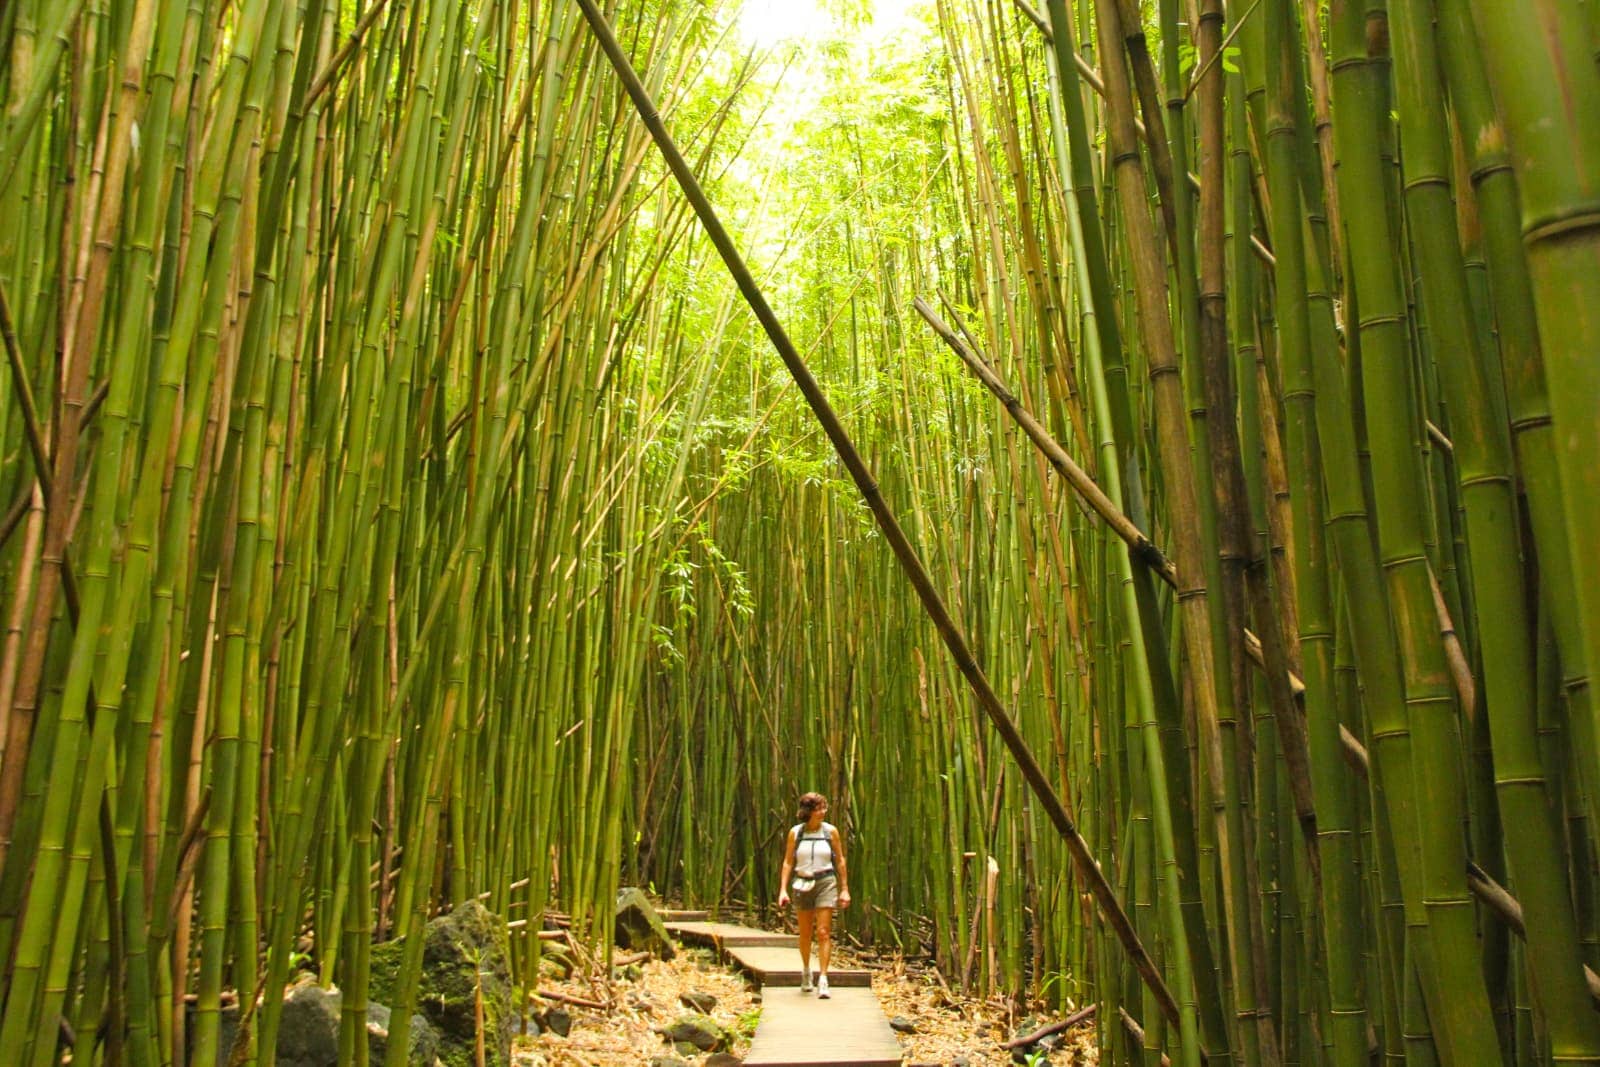 Woman walking through tall bamboo reeds